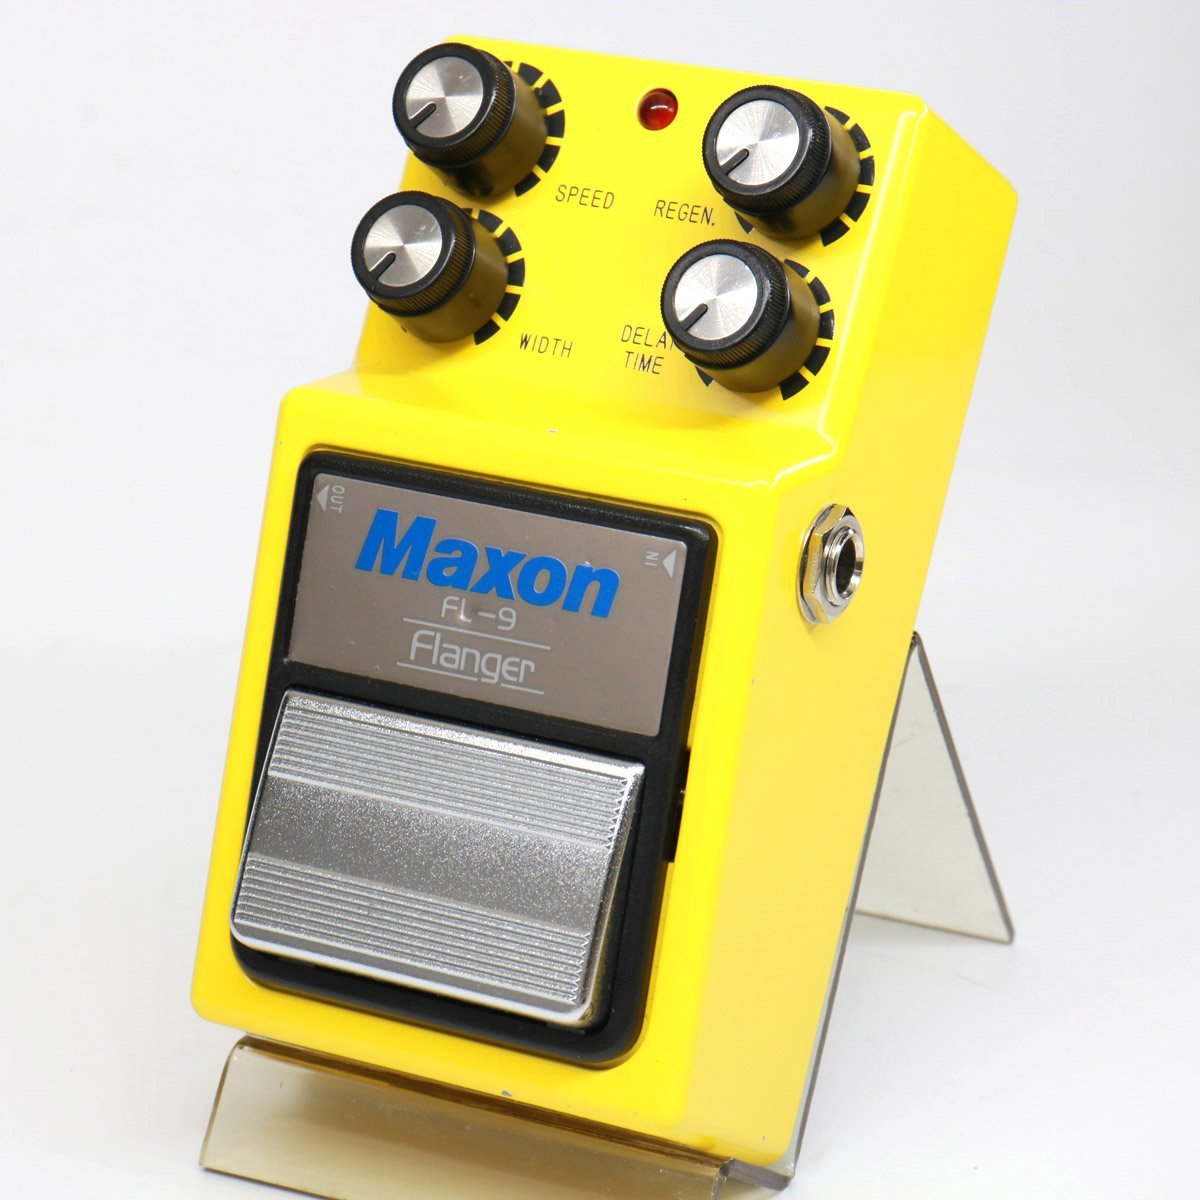 Maxon fl-9 Flanger